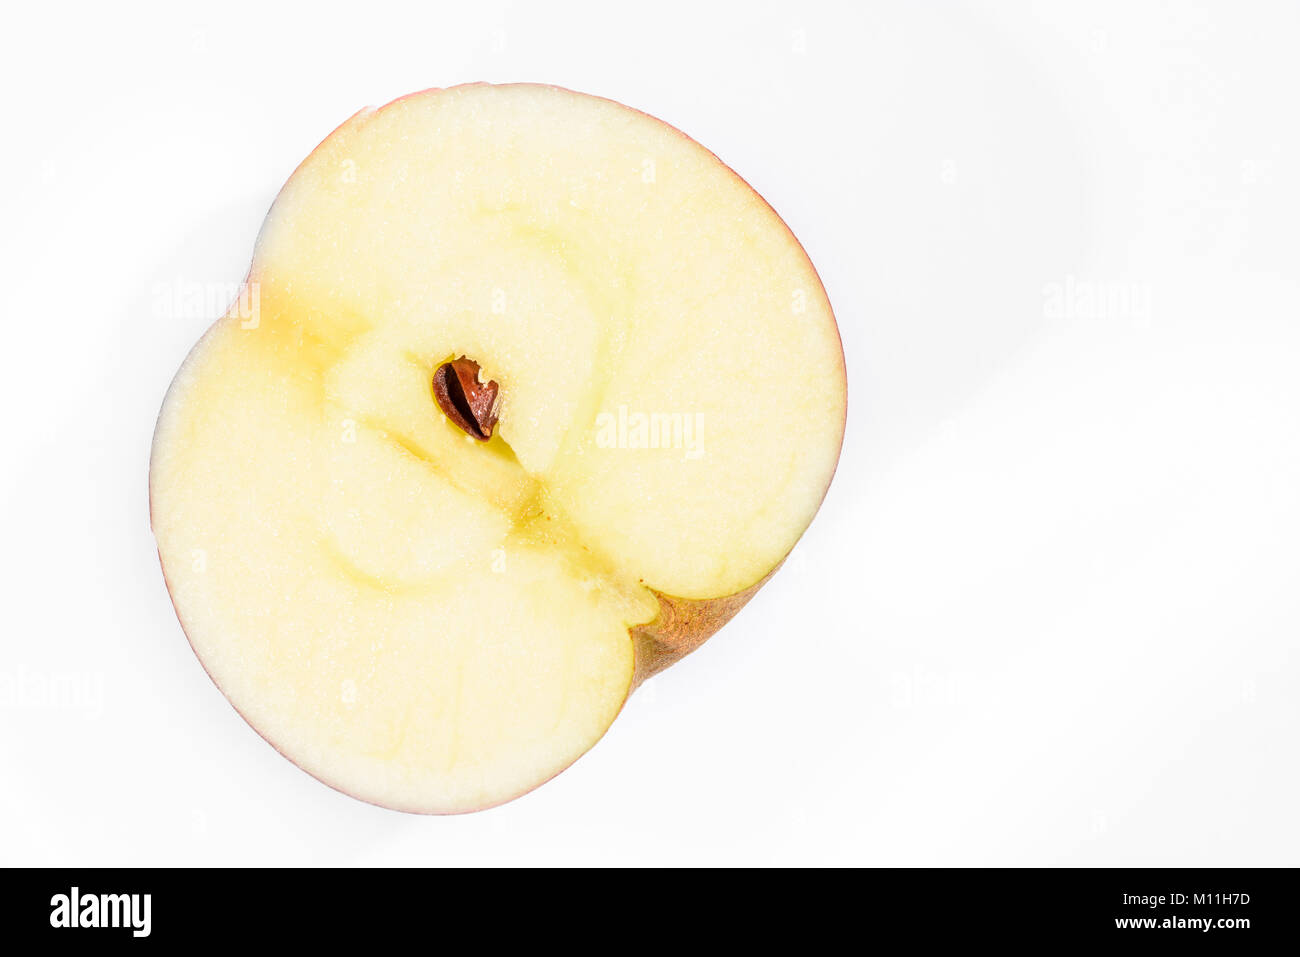 cox pippin apple Stock Photo